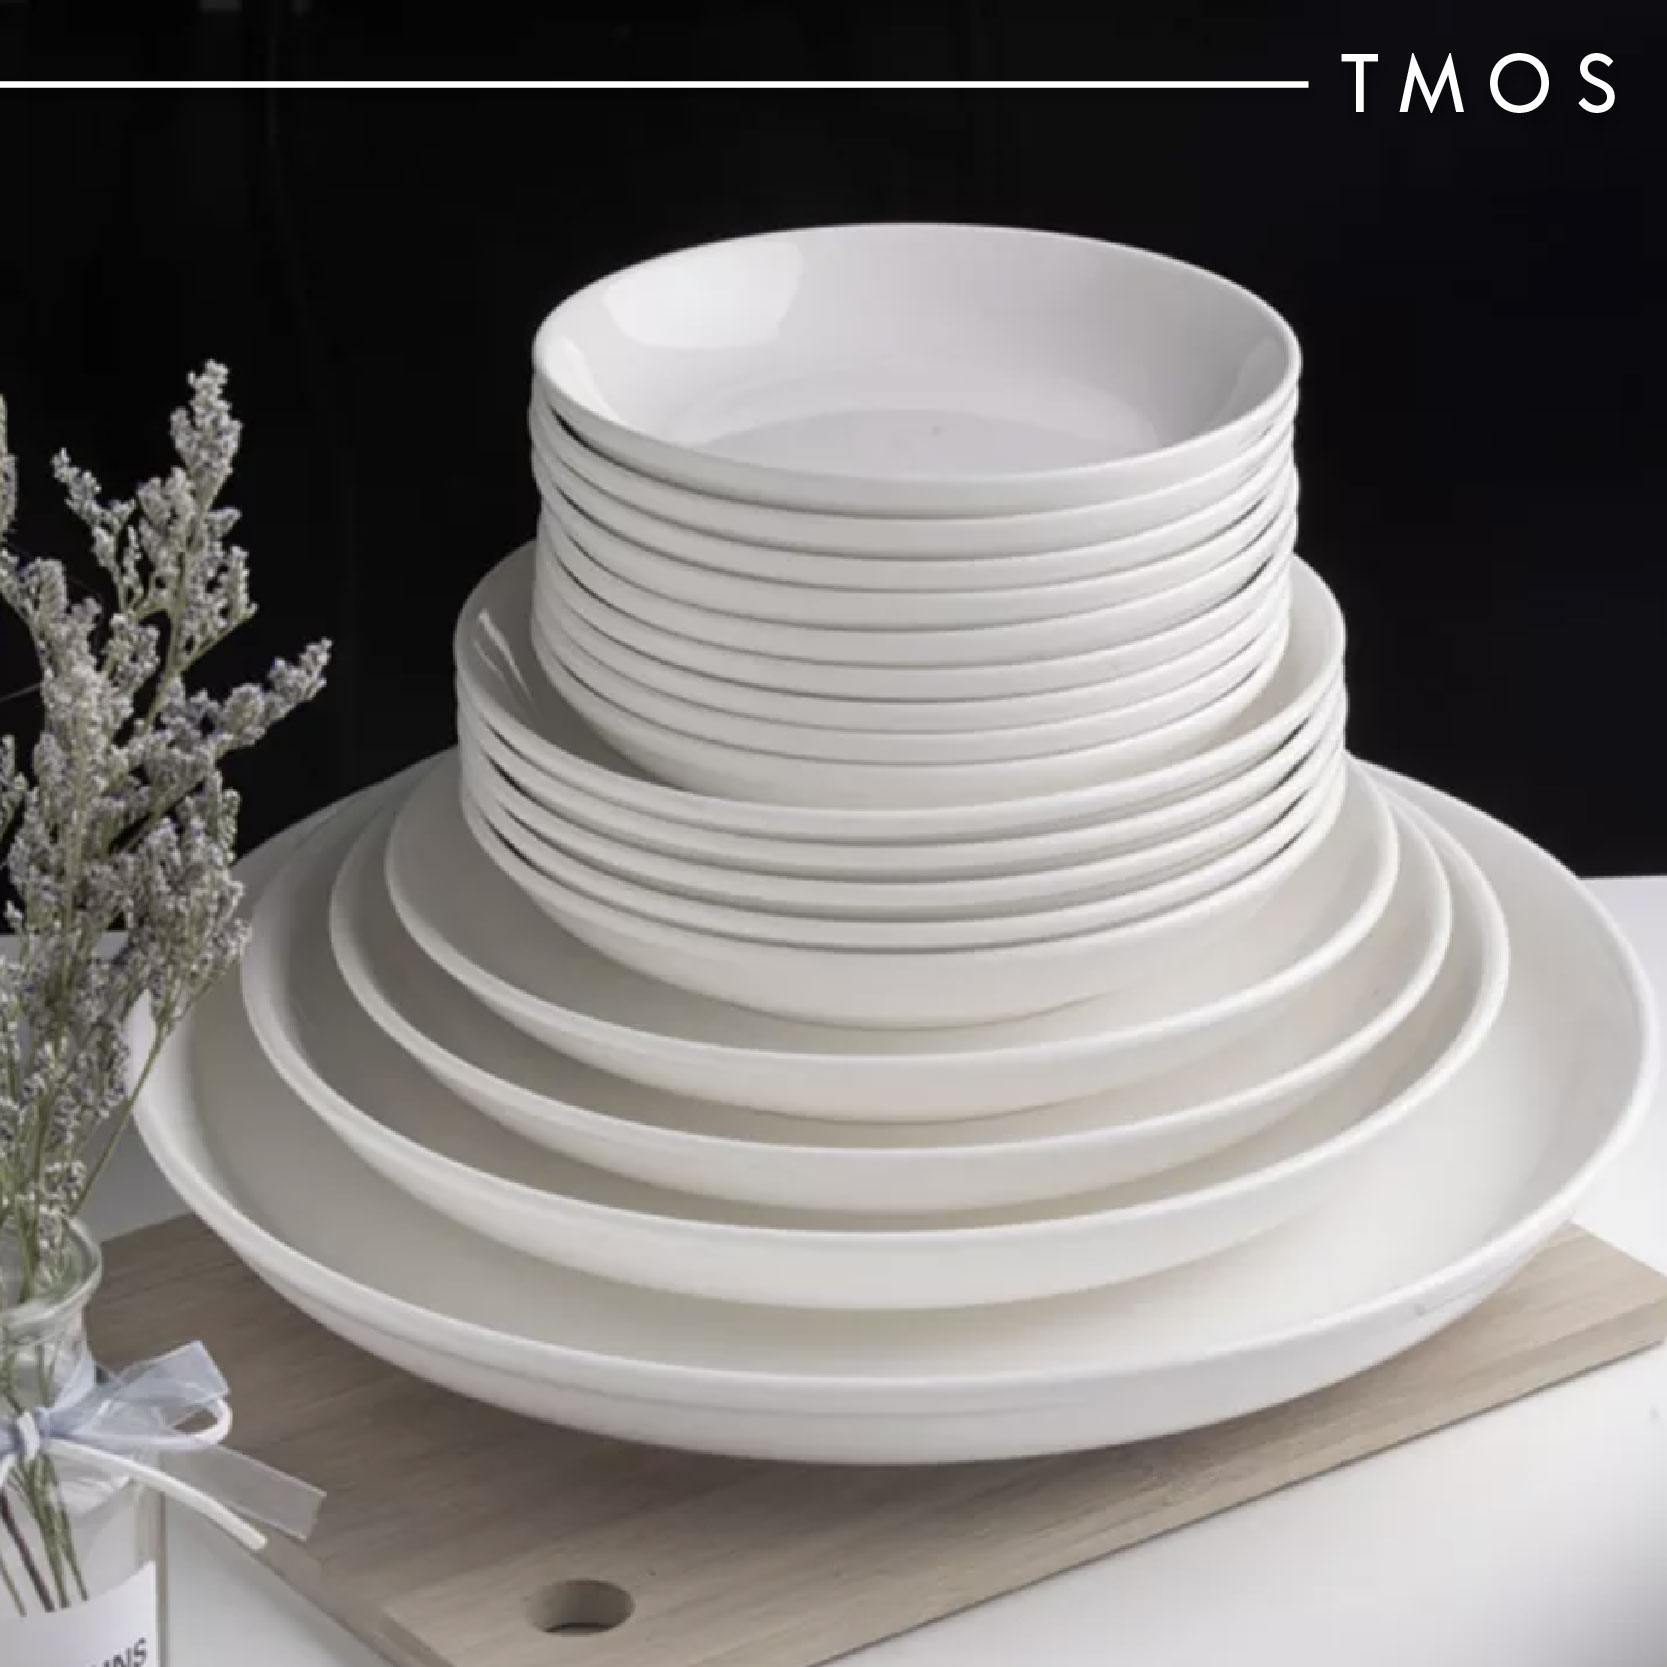 TMOS White Ceramic Plate Porcelain Plate Porcelain Dish Plate Dinner Plate Bowl White Plate Pinggan Putih